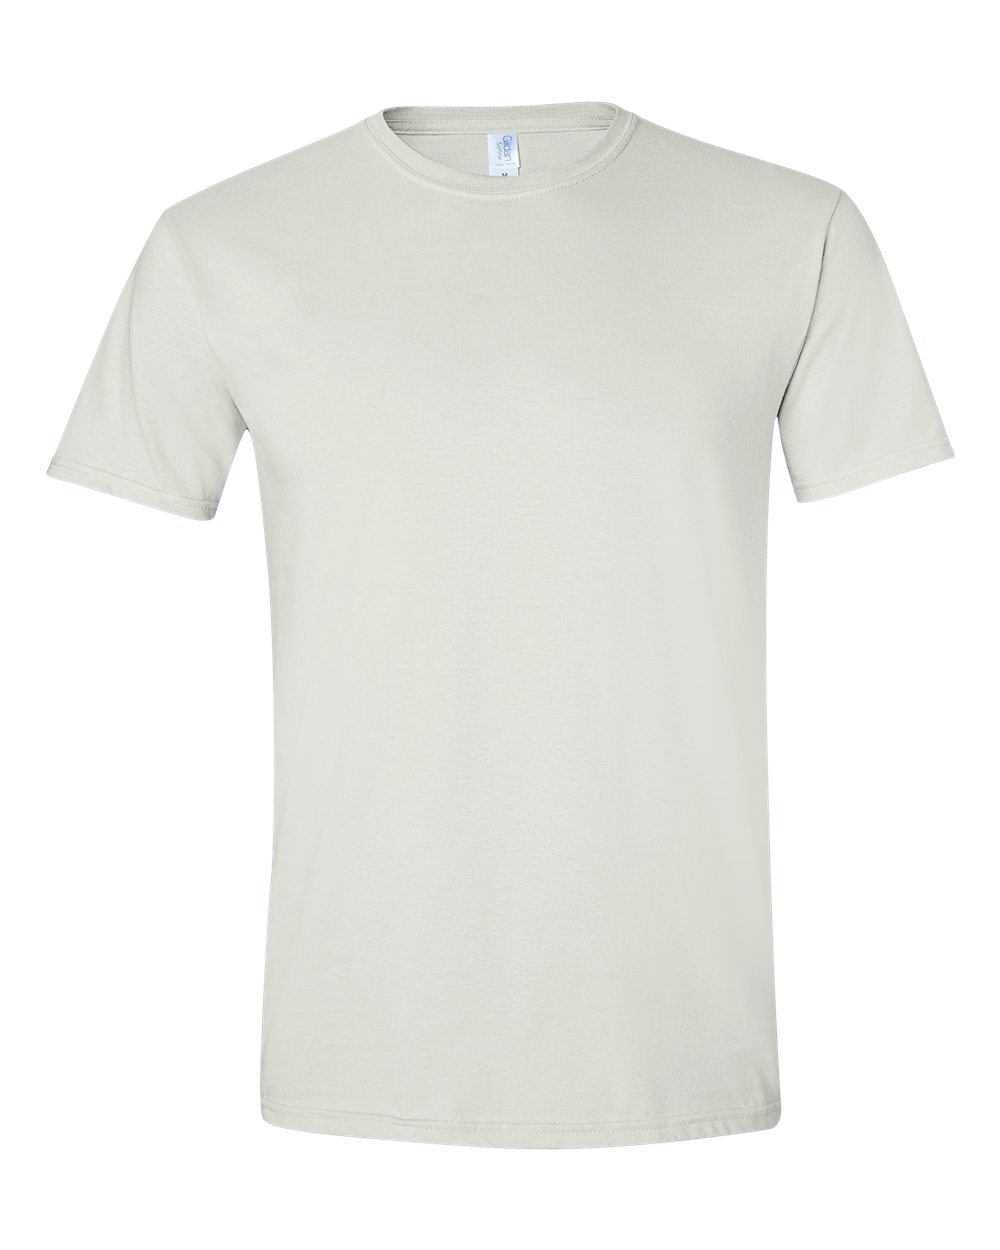 Download Softstyle T Shirt Gildan 64000 Clothing Shop Online